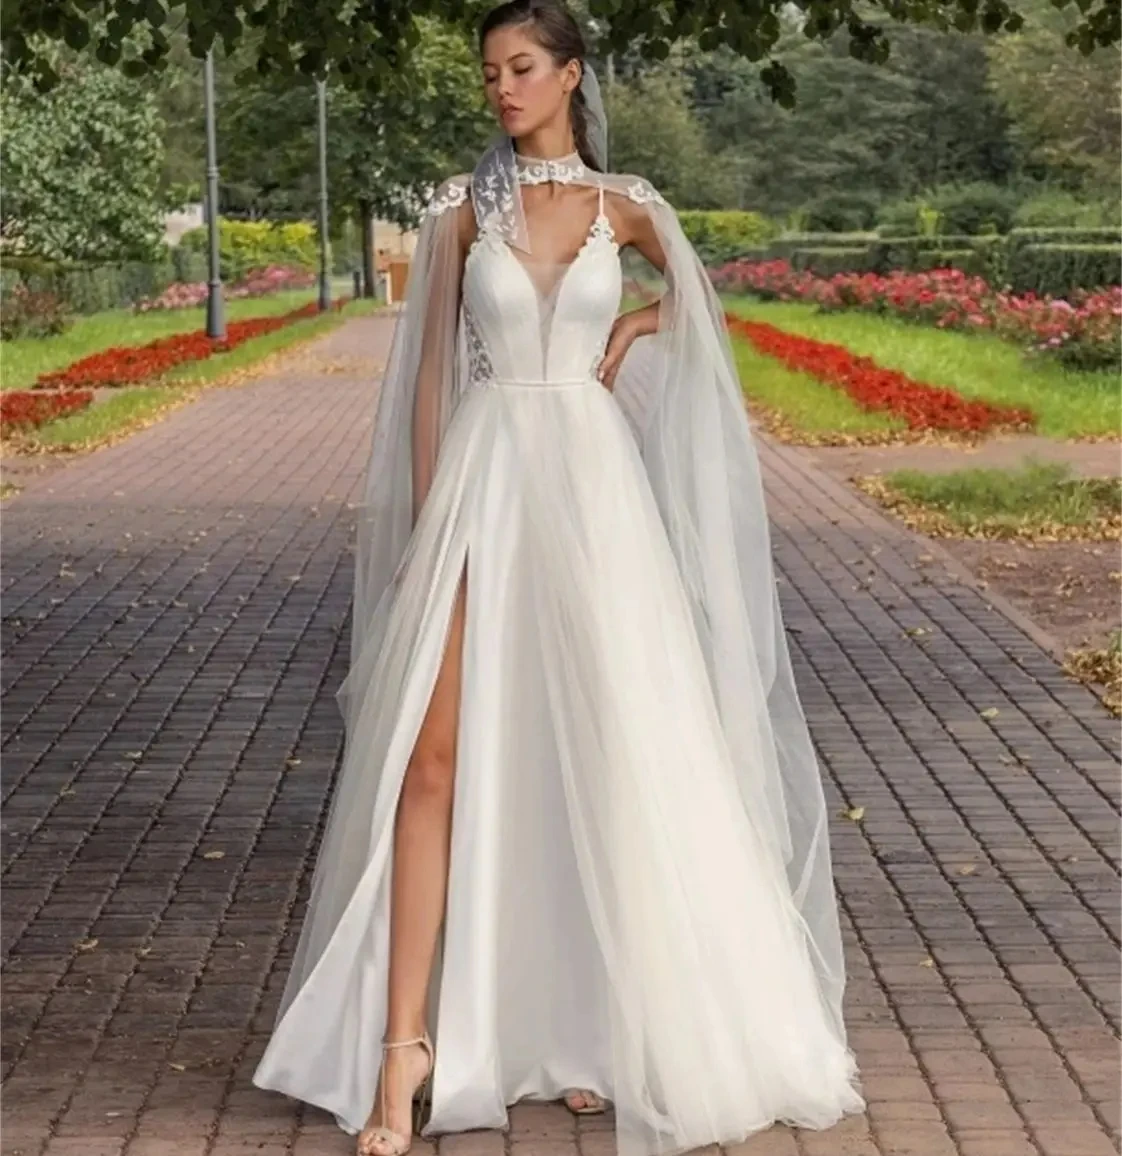 

Long Tulle Wedding Jackets Cloak Lace High Neck Bride Capes Bolero White Boho Bridal Shawl Wrap Evening Dress Cover Up Top